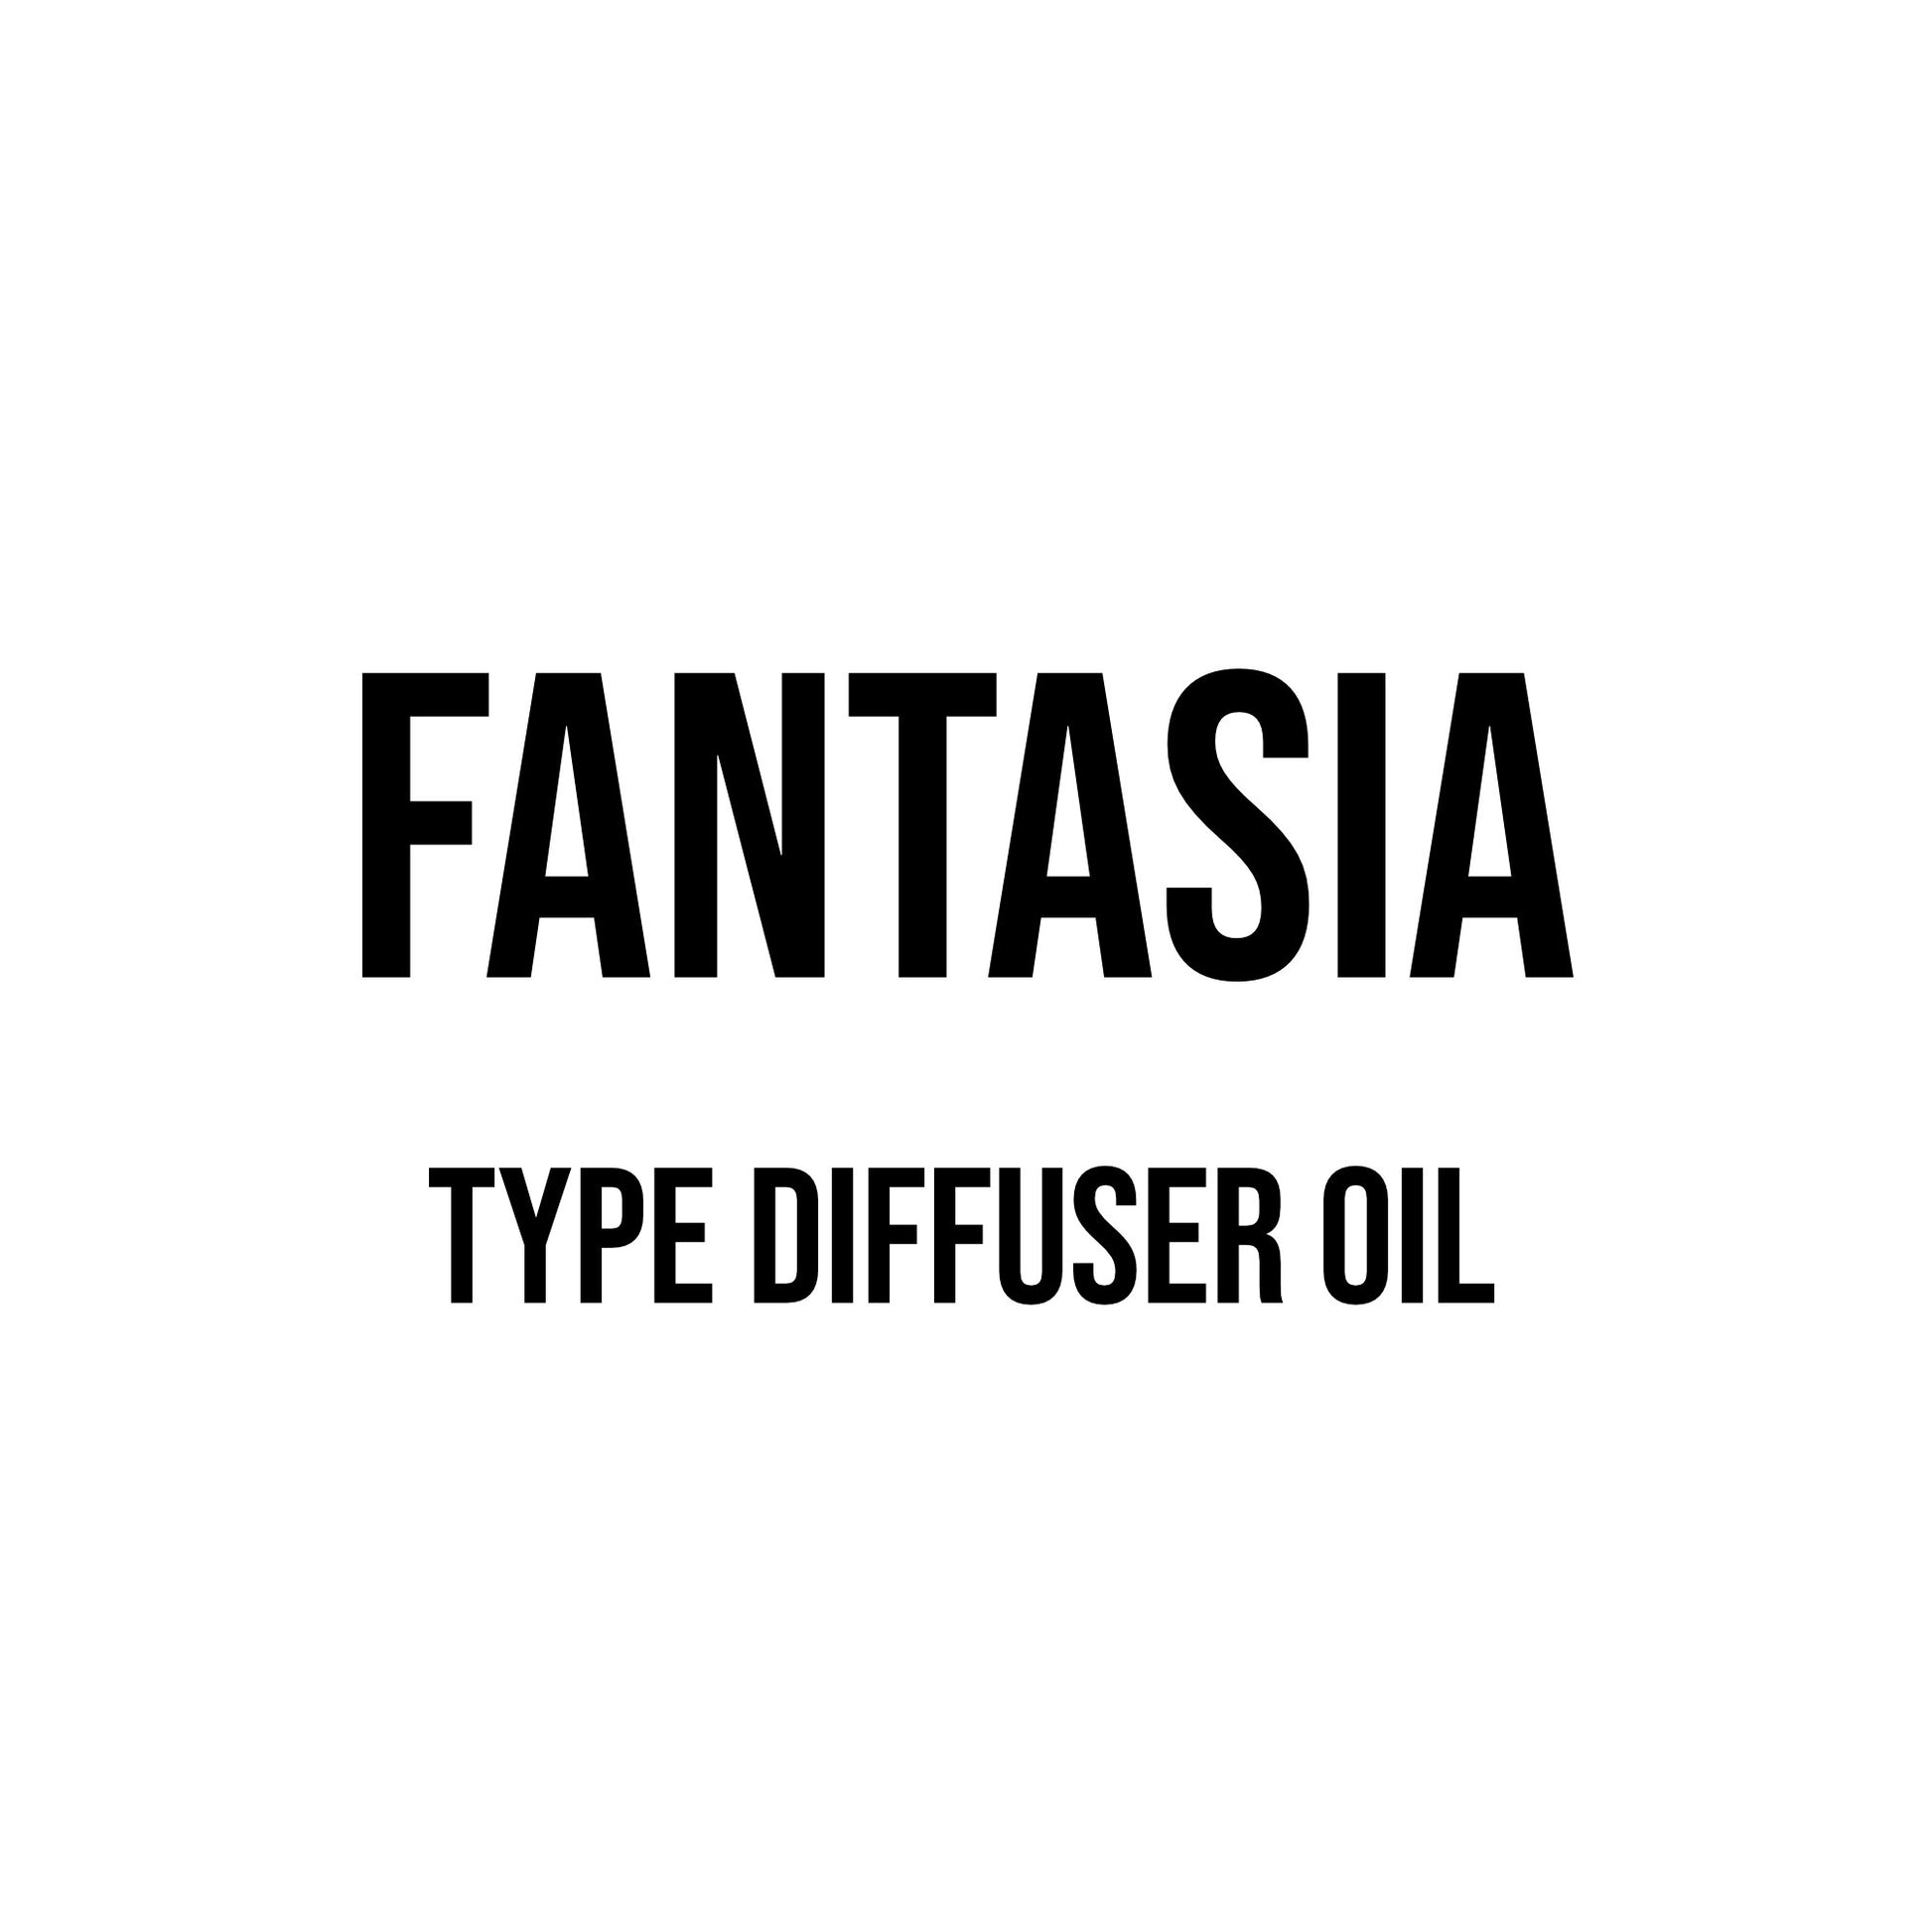 Fantasia Type Diffuser Oil  Premium Fragrance for Scent Diffuser